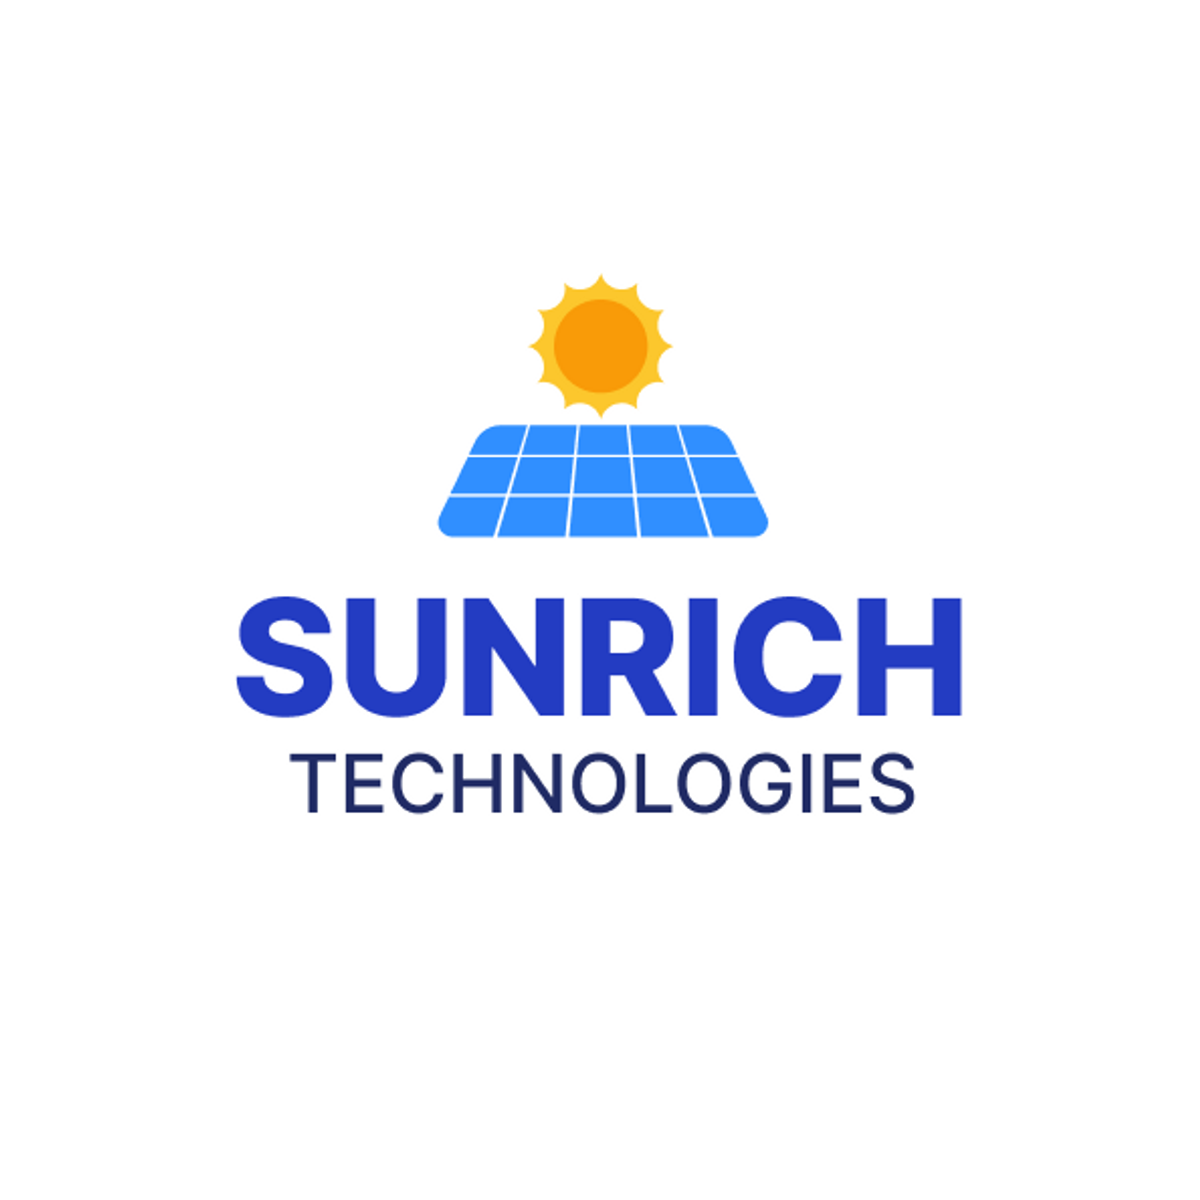 Sunrich Technologies